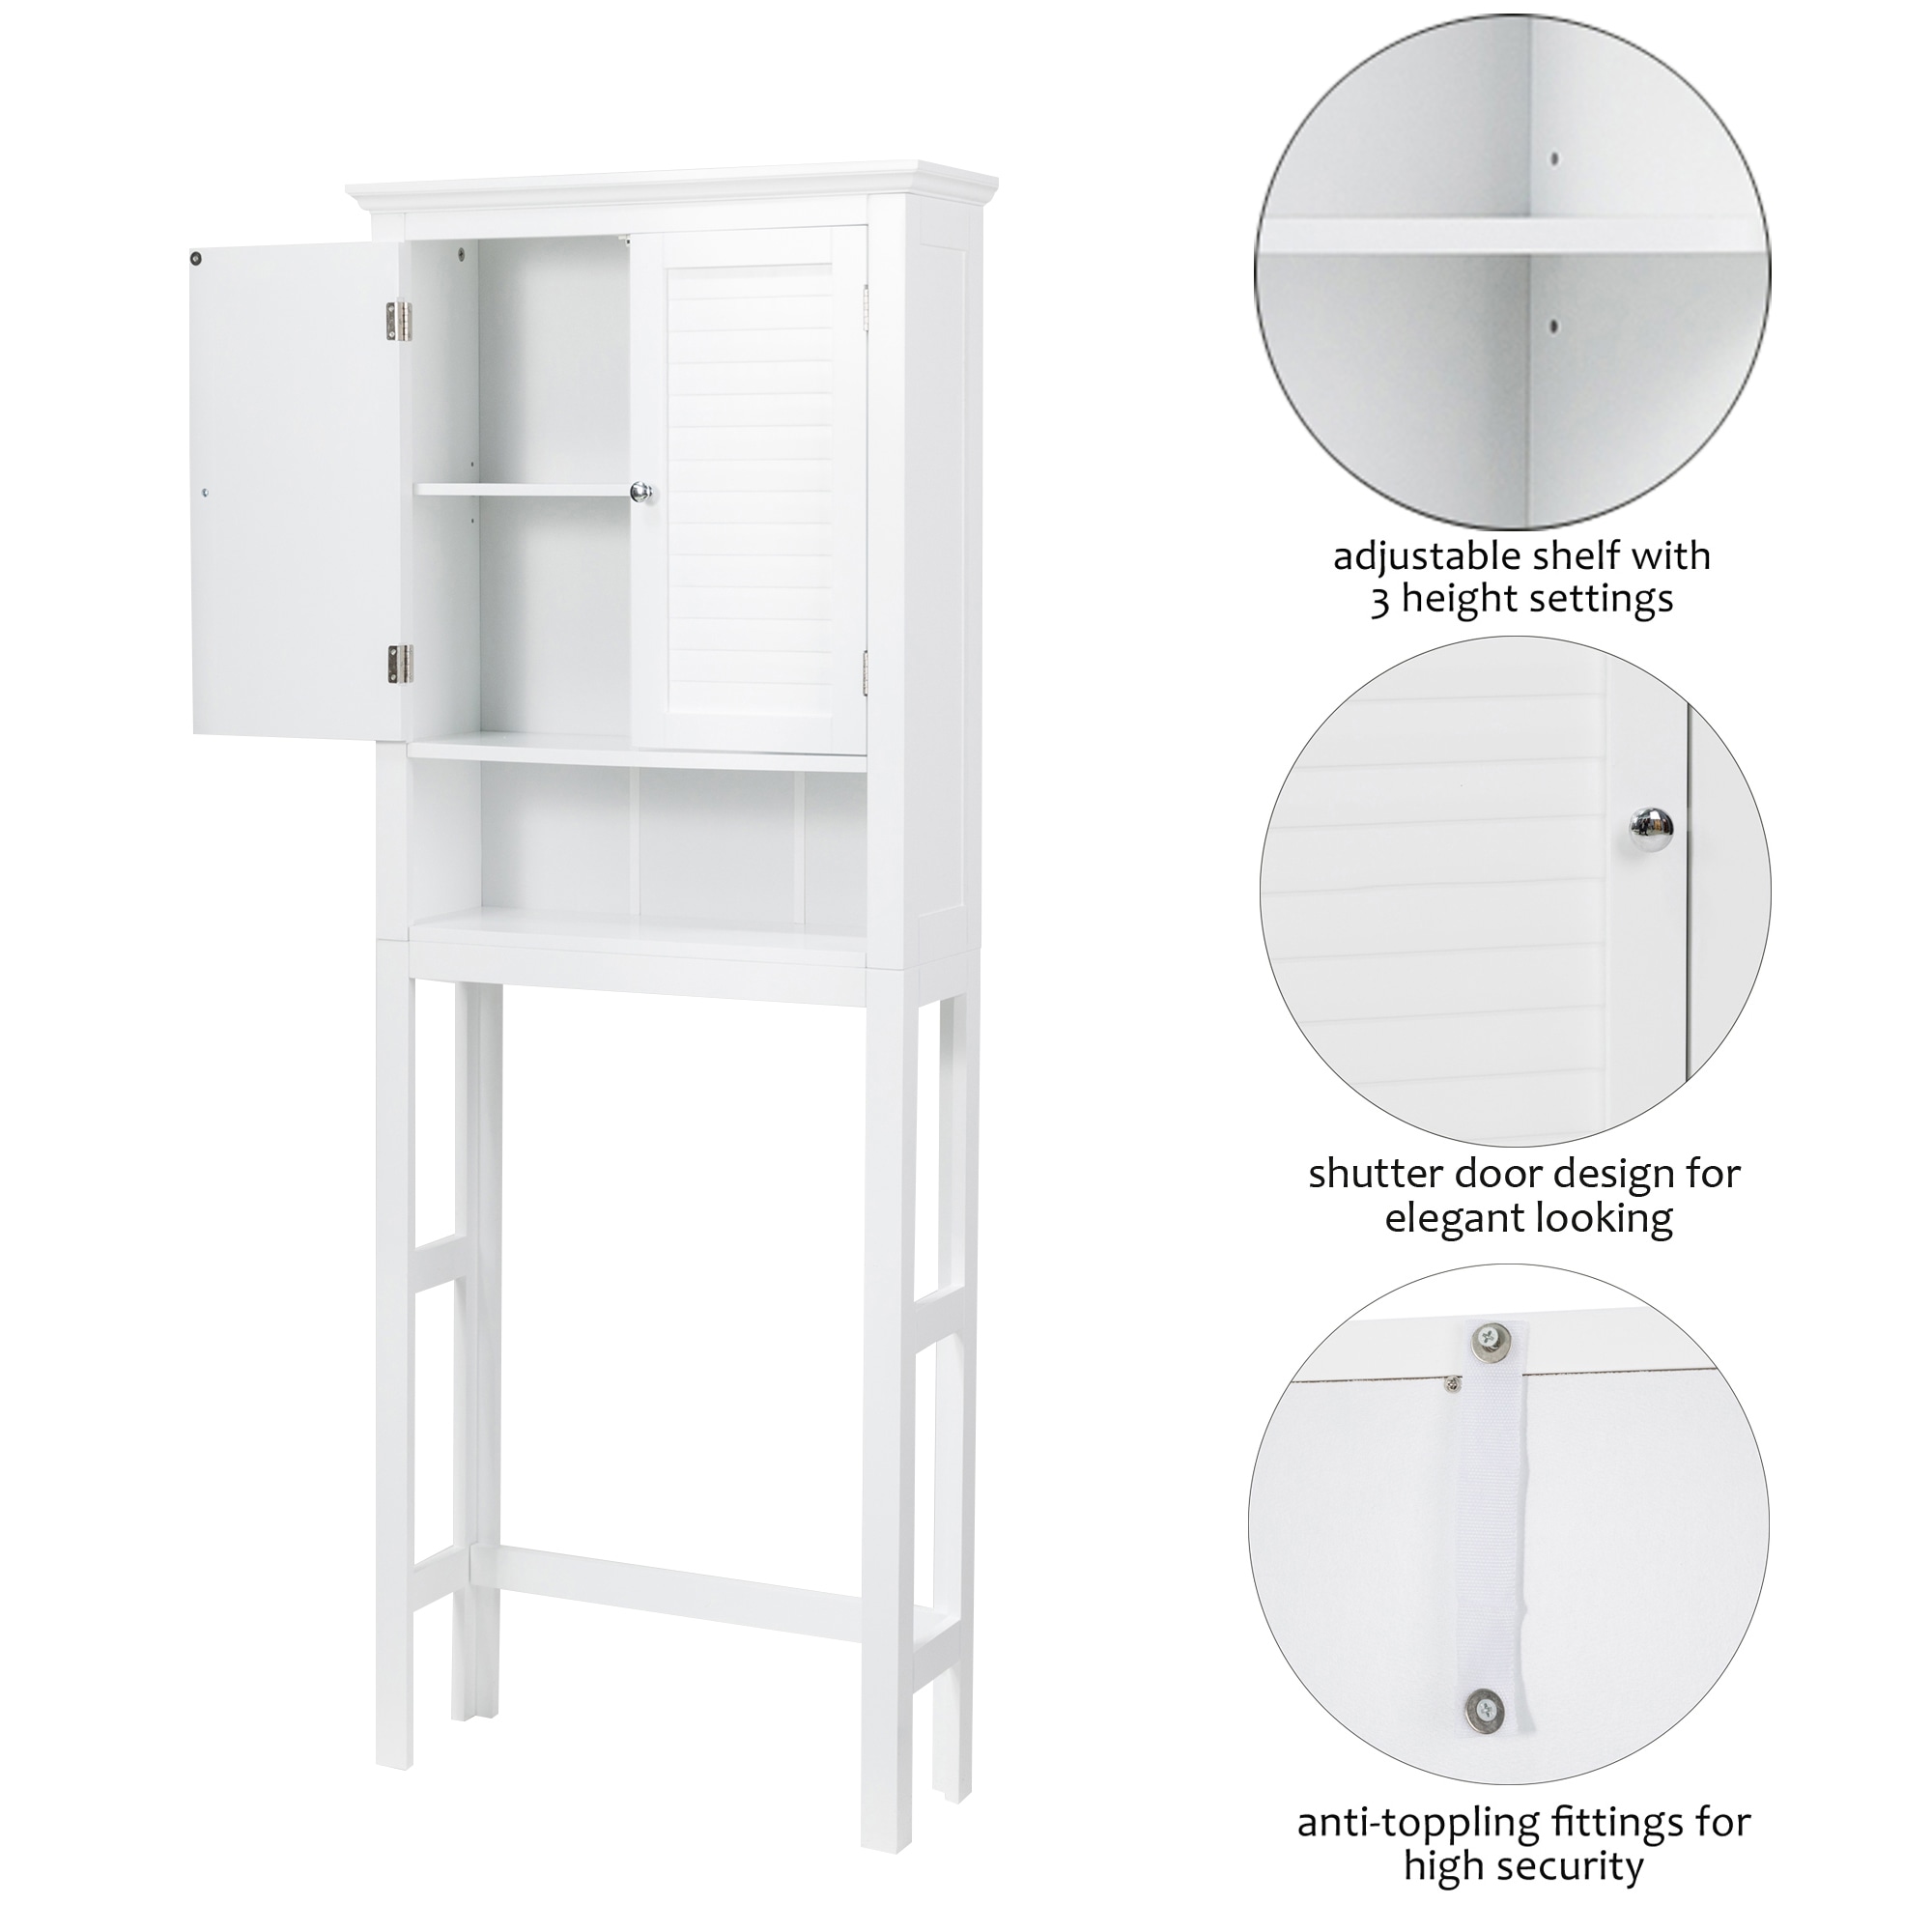 Giantex Over-the-Toilet Storage Cabinet, Freestanding 4-Tier Bathroom Organizer Rack, Espresso